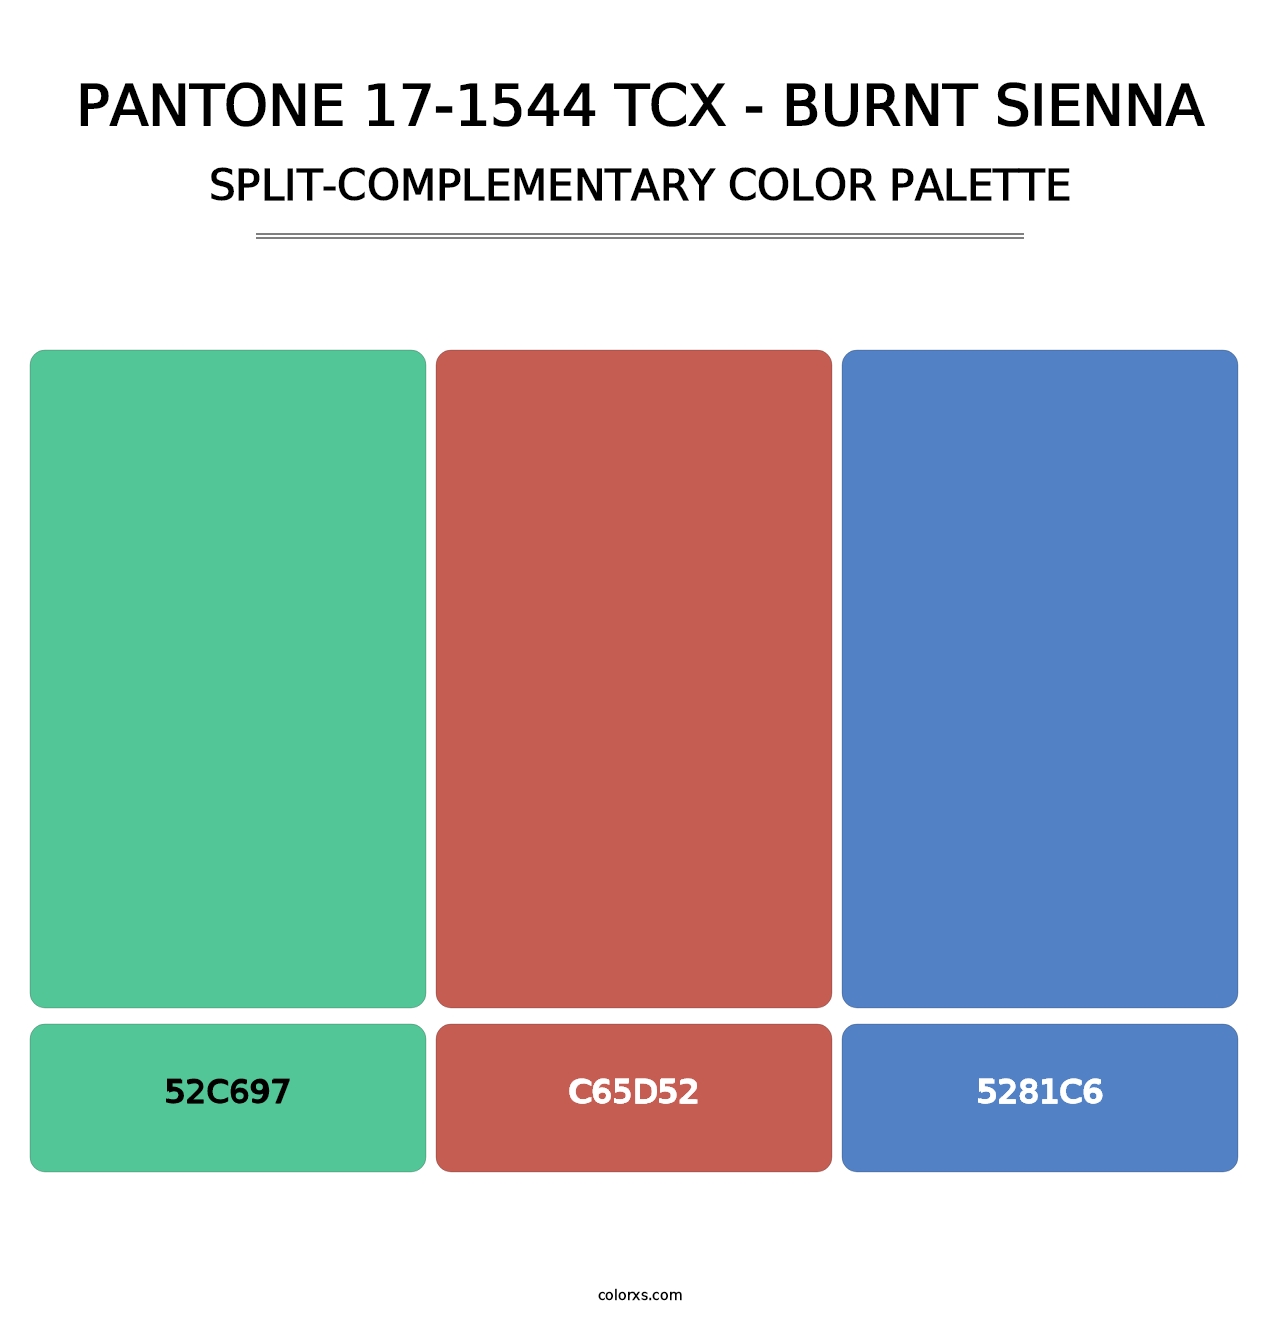 PANTONE 17-1544 TCX - Burnt Sienna - Split-Complementary Color Palette